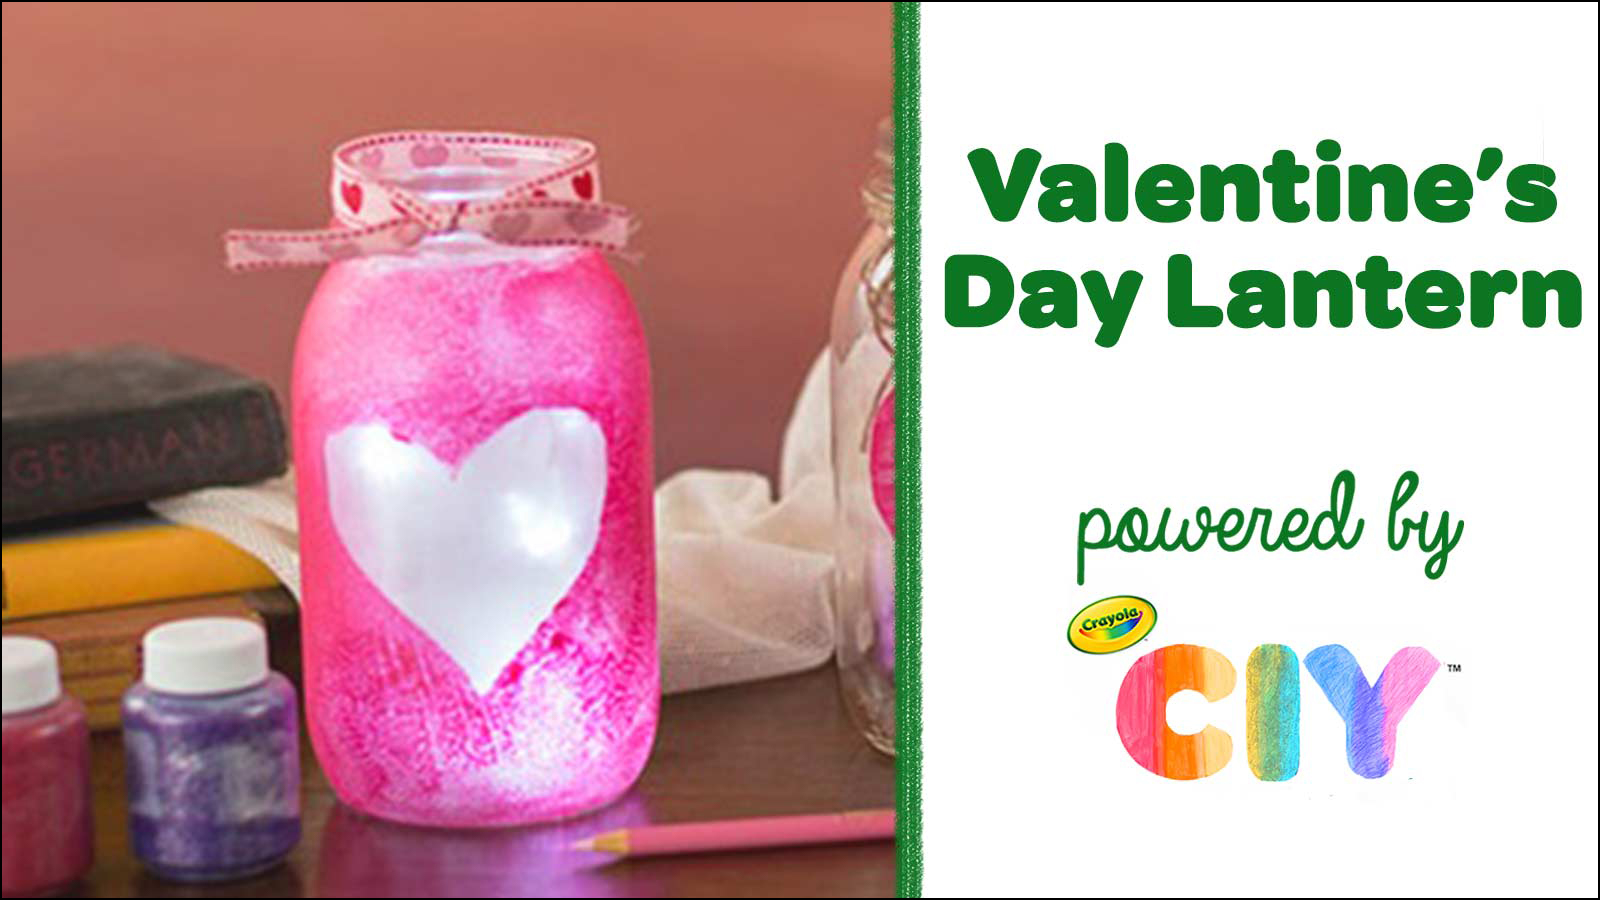 Valentines Day Lantern CIY Video Poster Frame